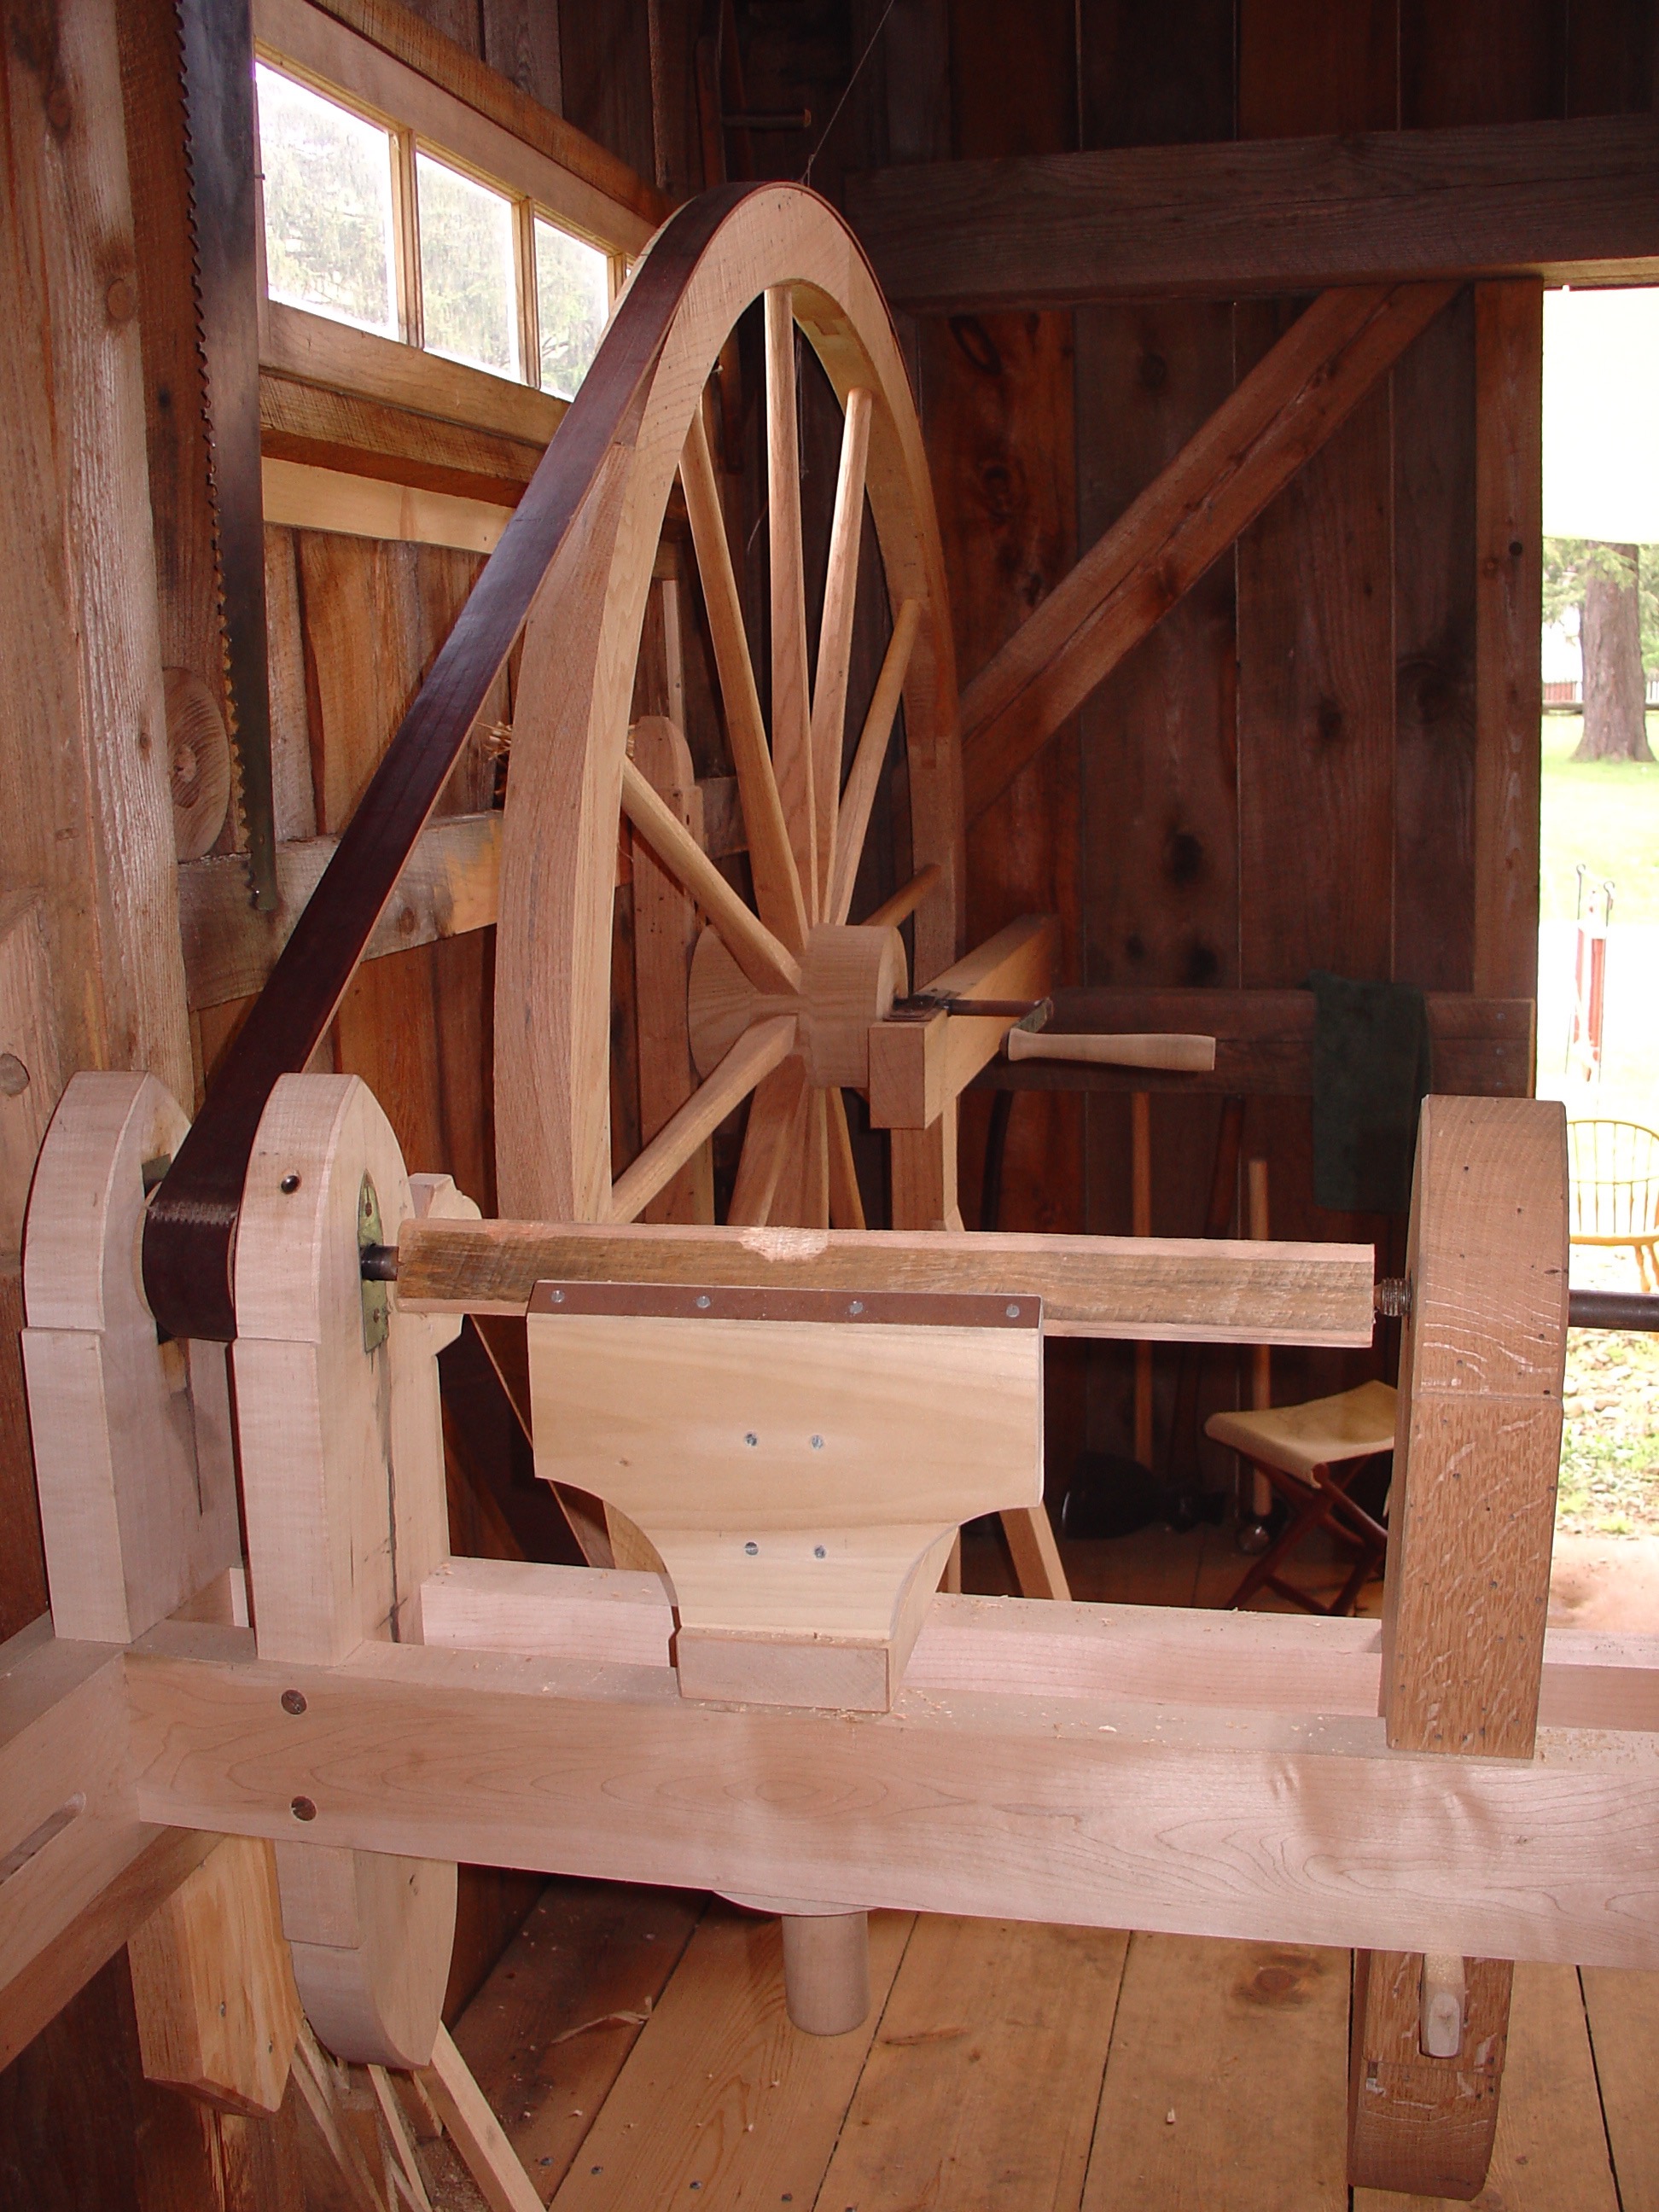 Great wheel lathe I built at the Compass Inn carpenter's shop